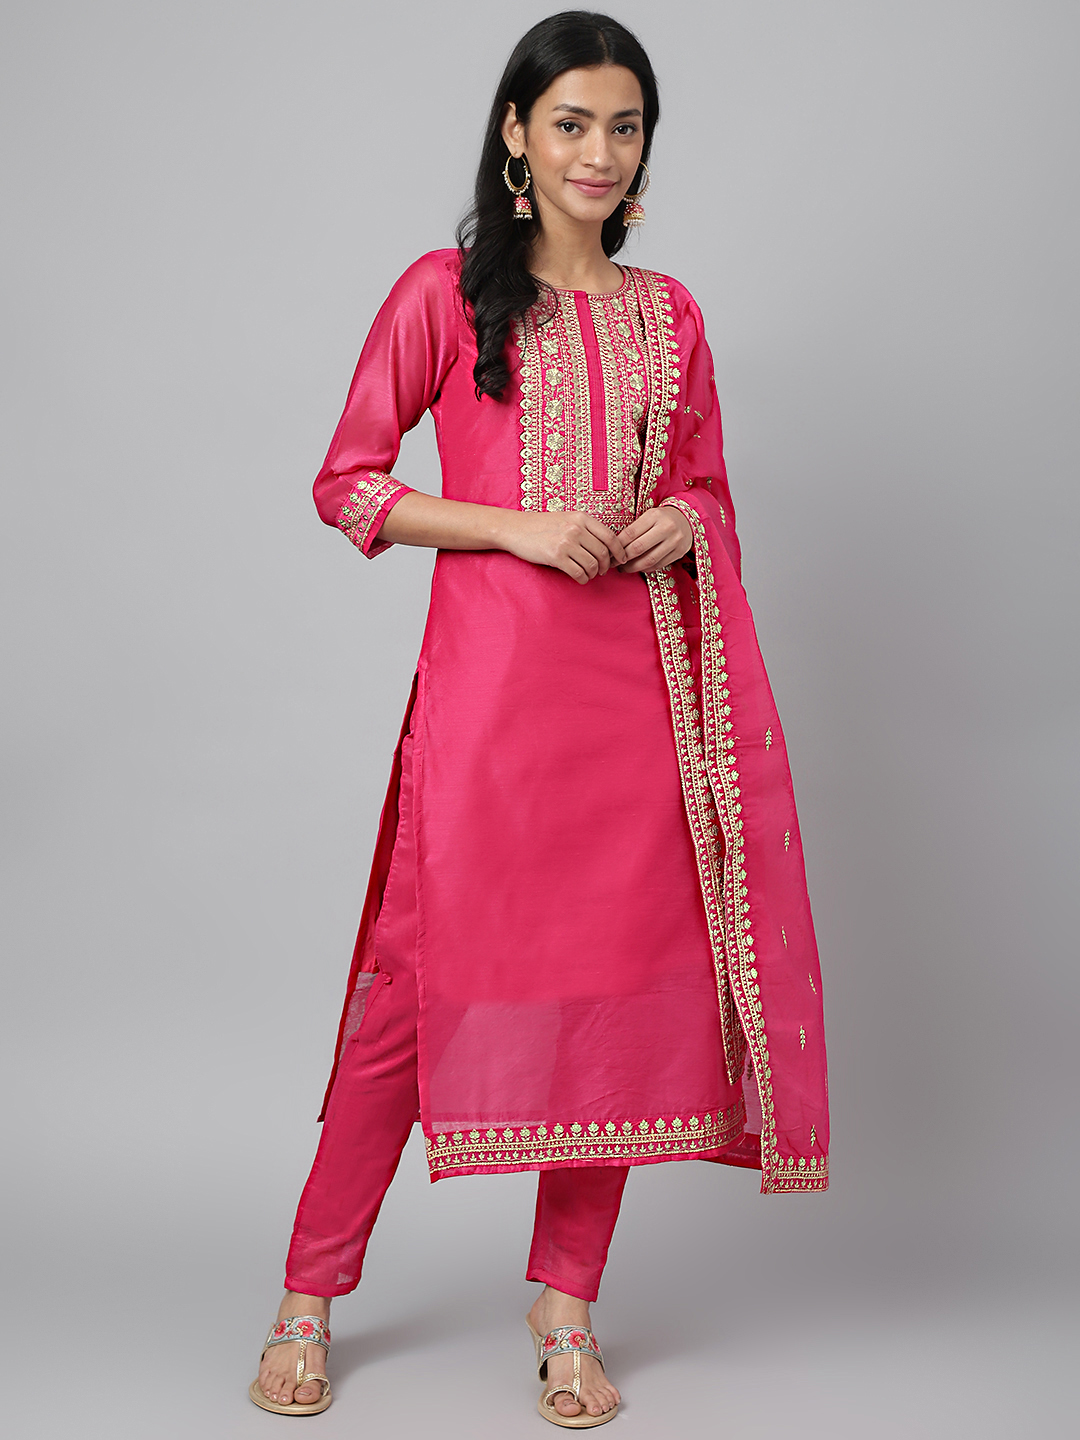 Discover more than 125 party wear chanderi silk kurti super hot